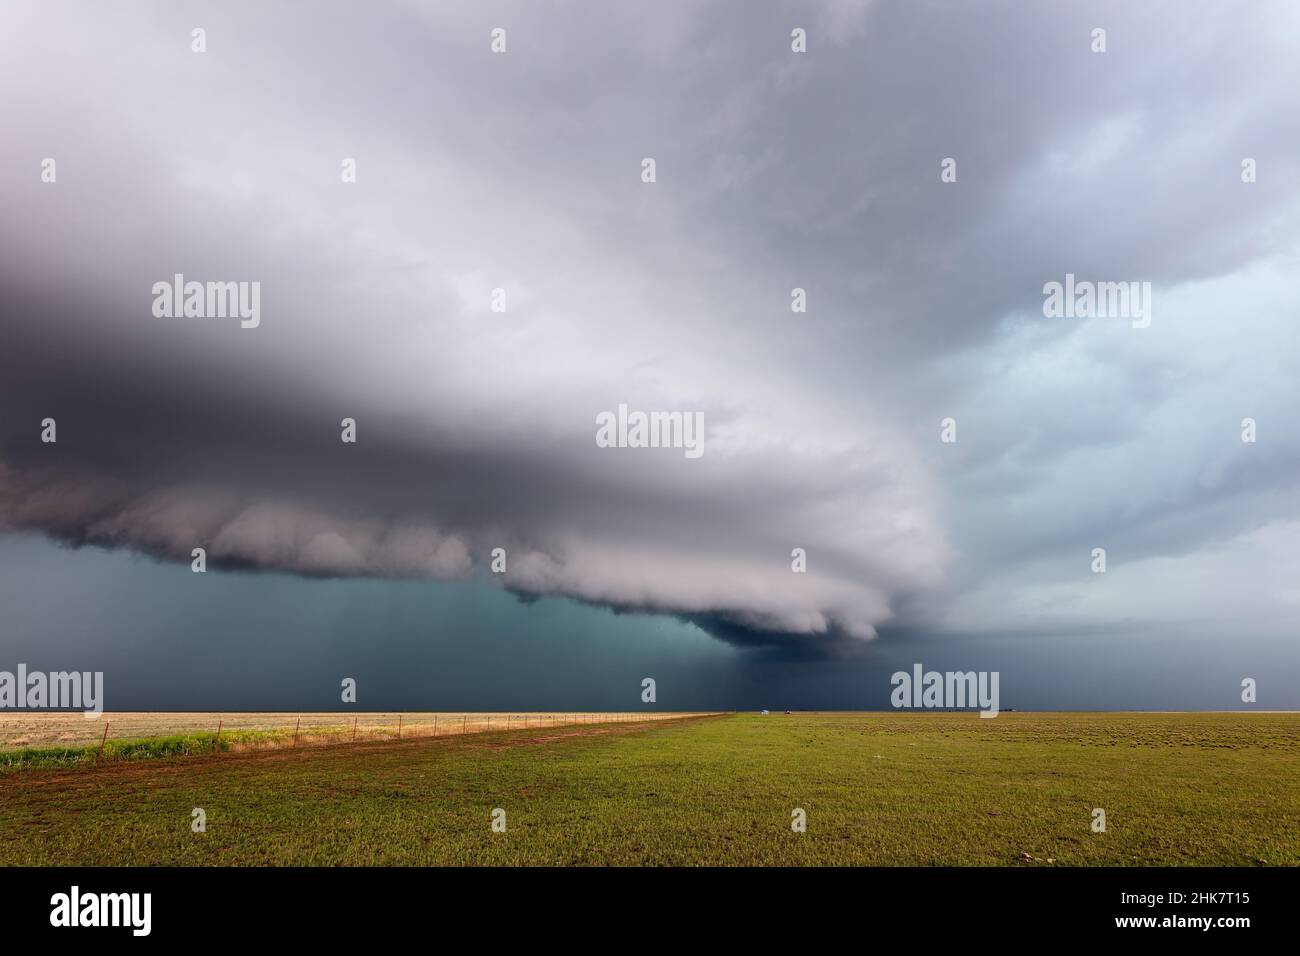 Dramatic shelf cloud (arcus) approaching ahead of a storm over a field near Vega, Texas Stock Photo